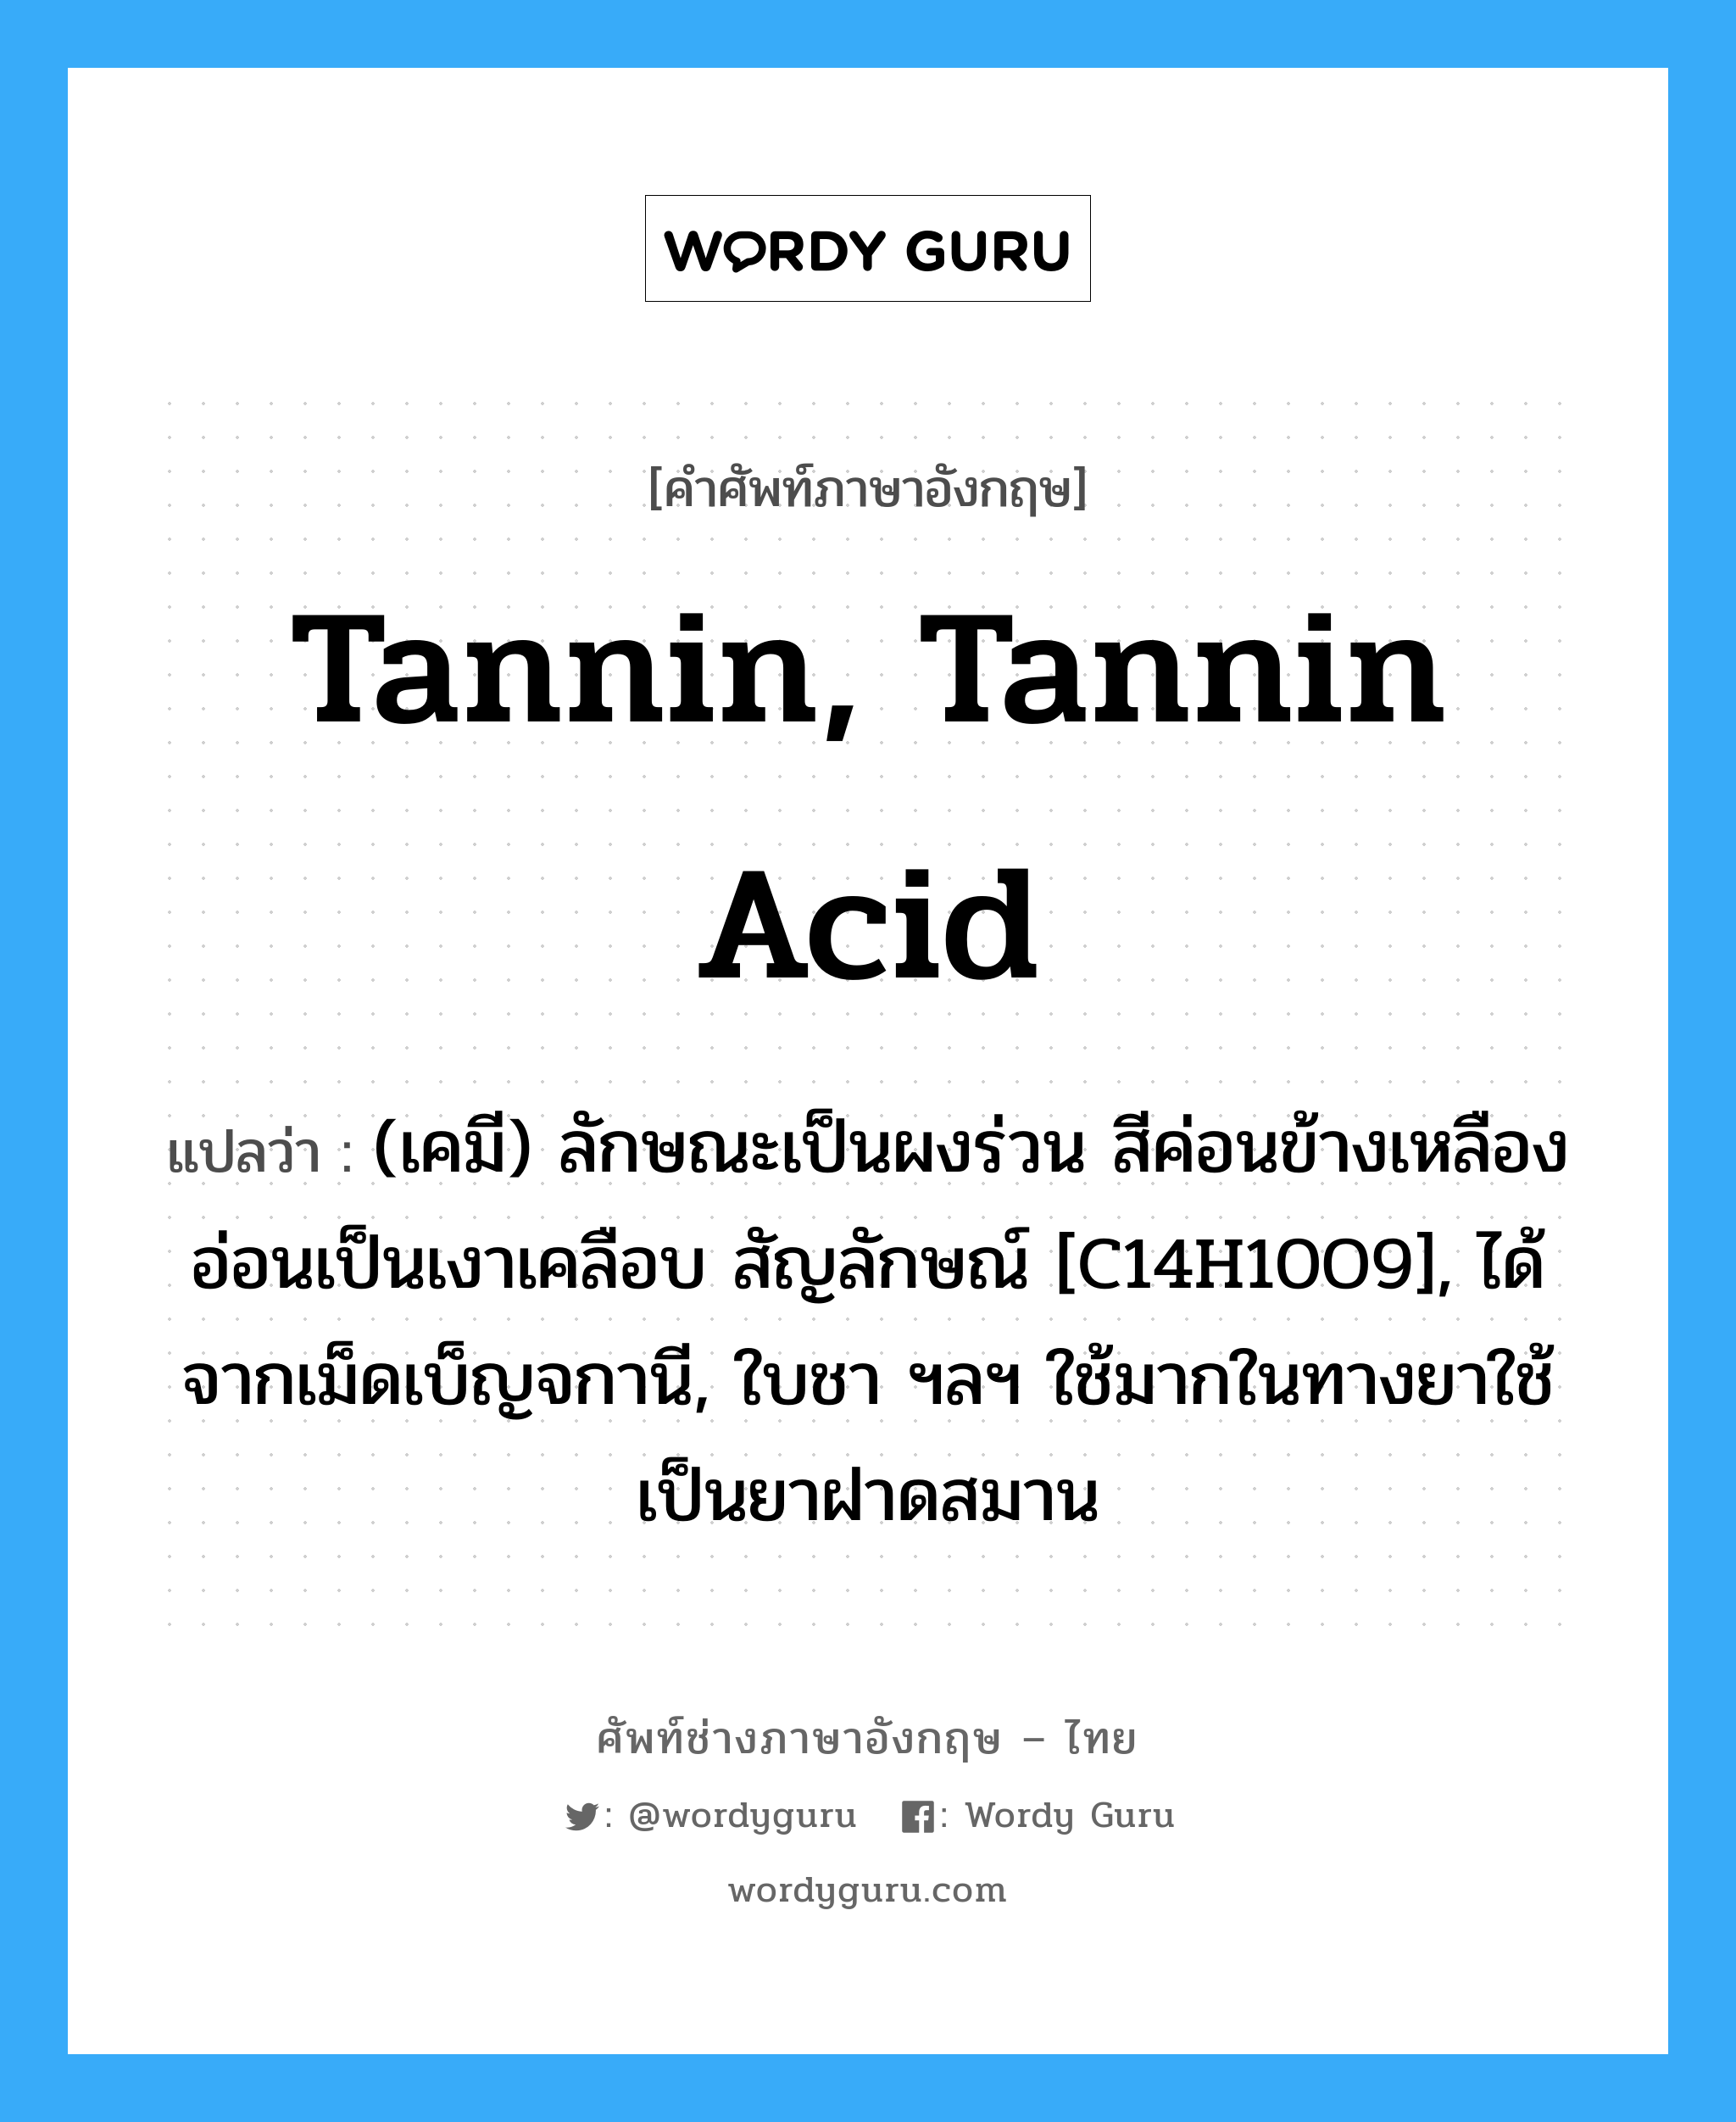 tannin, tannin acid แปลว่า?, คำศัพท์ช่างภาษาอังกฤษ - ไทย tannin, tannin acid คำศัพท์ภาษาอังกฤษ tannin, tannin acid แปลว่า (เคมี) ลักษณะเป็นผงร่วน สีค่อนข้างเหลืองอ่อนเป็นเงาเคลือบ สัญลักษณ์ [C14H10O9], ได้จากเม็ดเบ็ญจกานี, ใบชา ฯลฯ ใช้มากในทางยาใช้เป็นยาฝาดสมาน